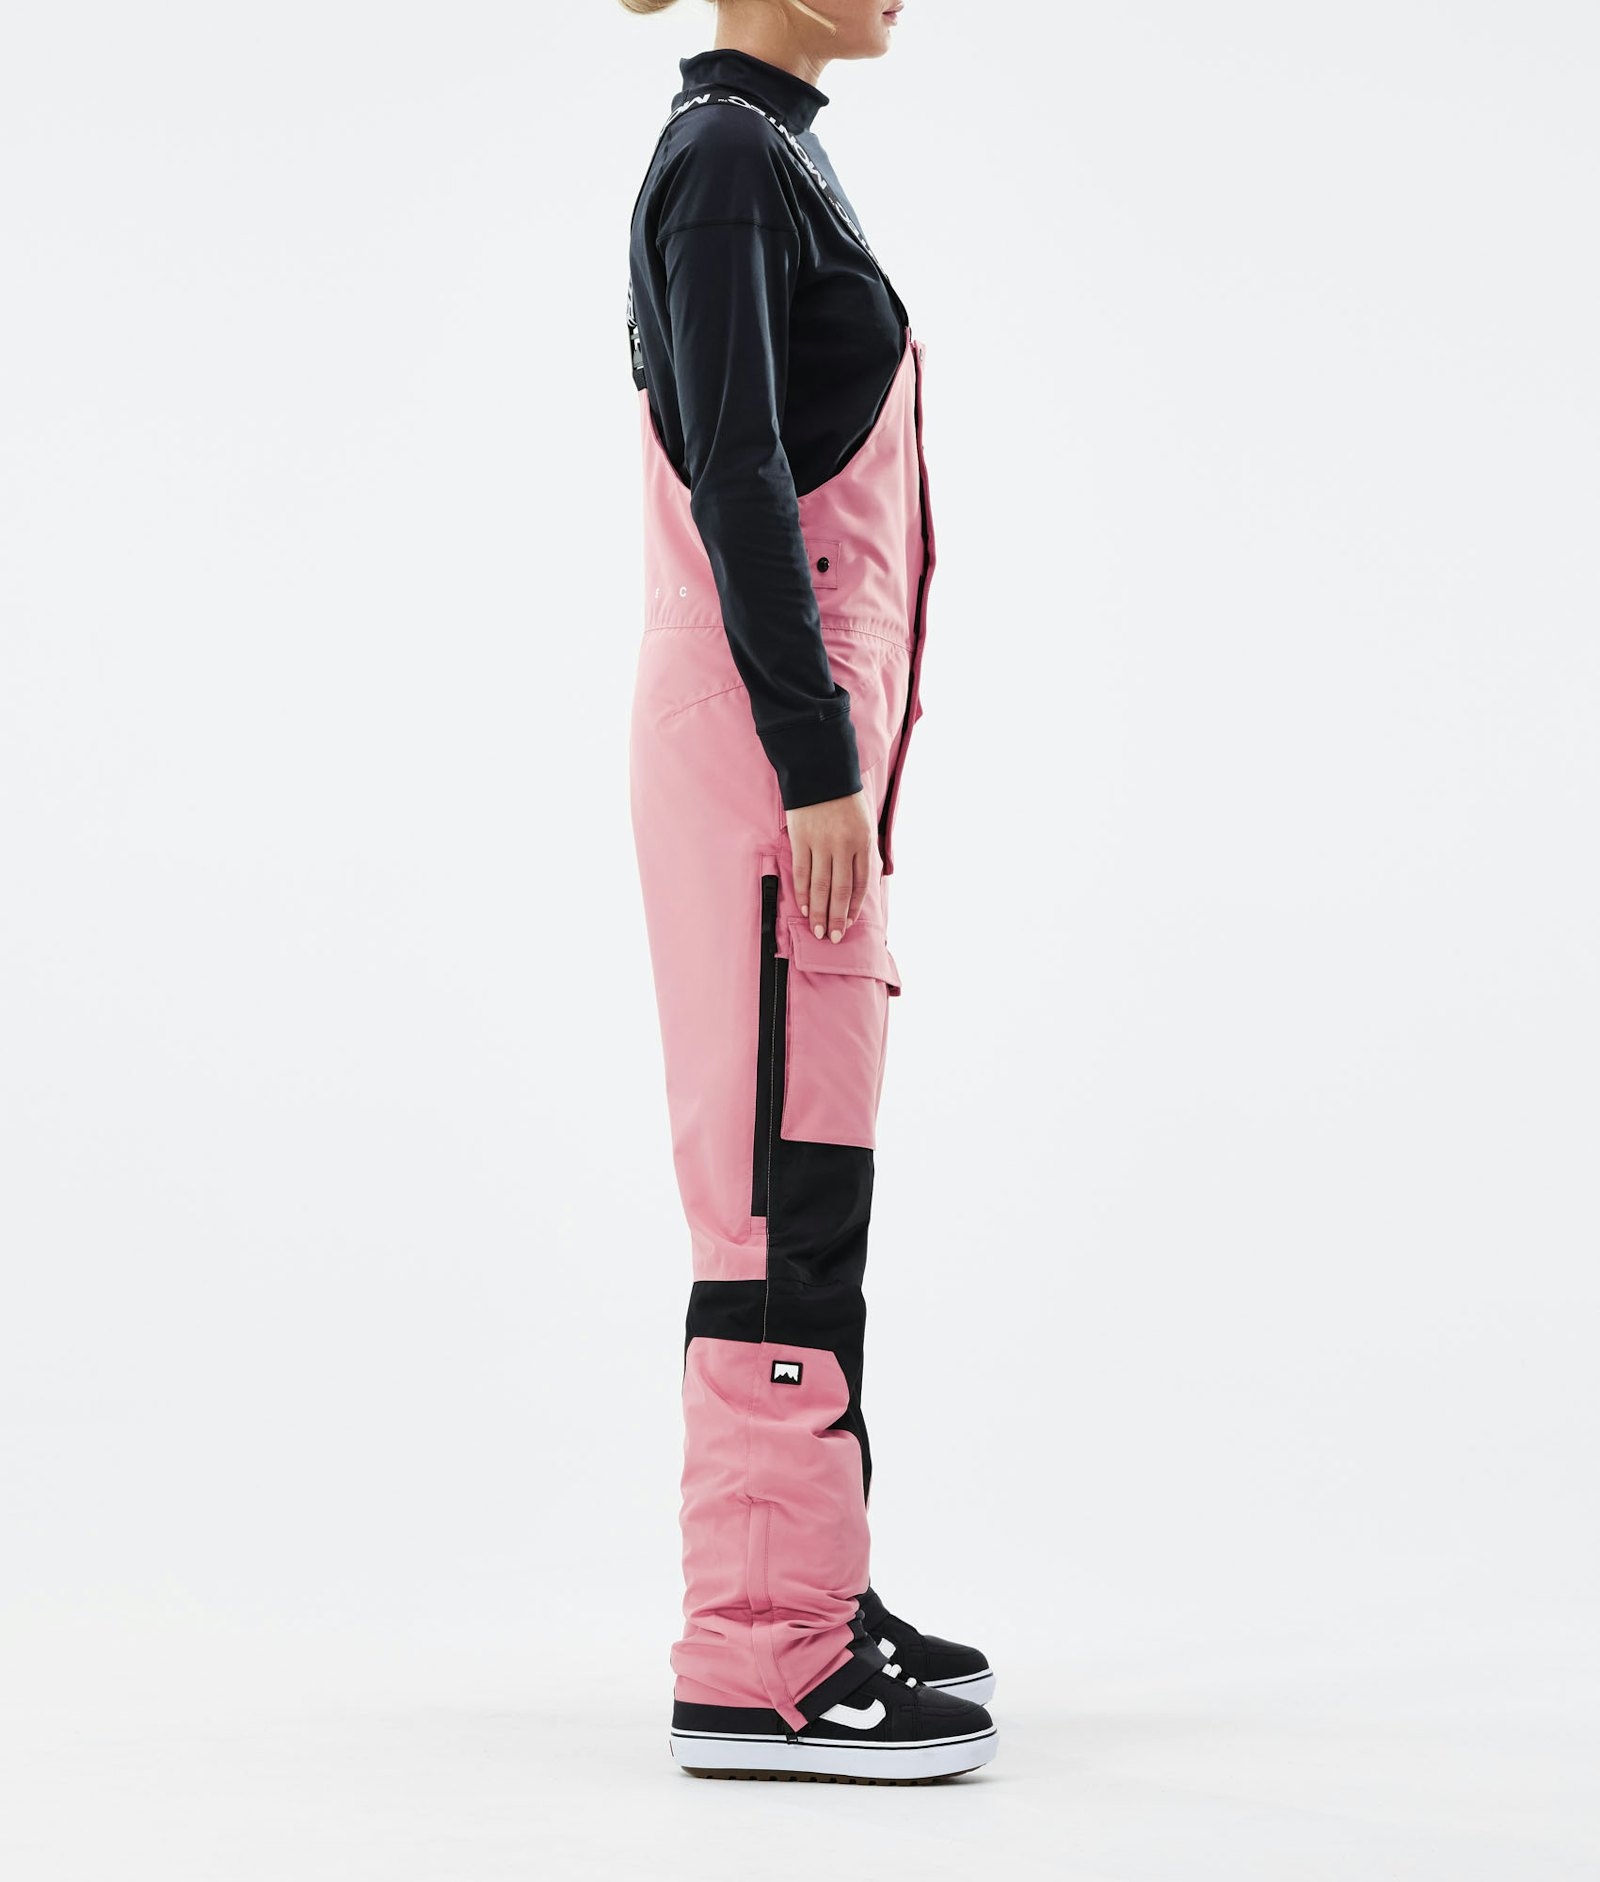 Fawk W 2021 Snowboard Bukser Dame Pink/Black